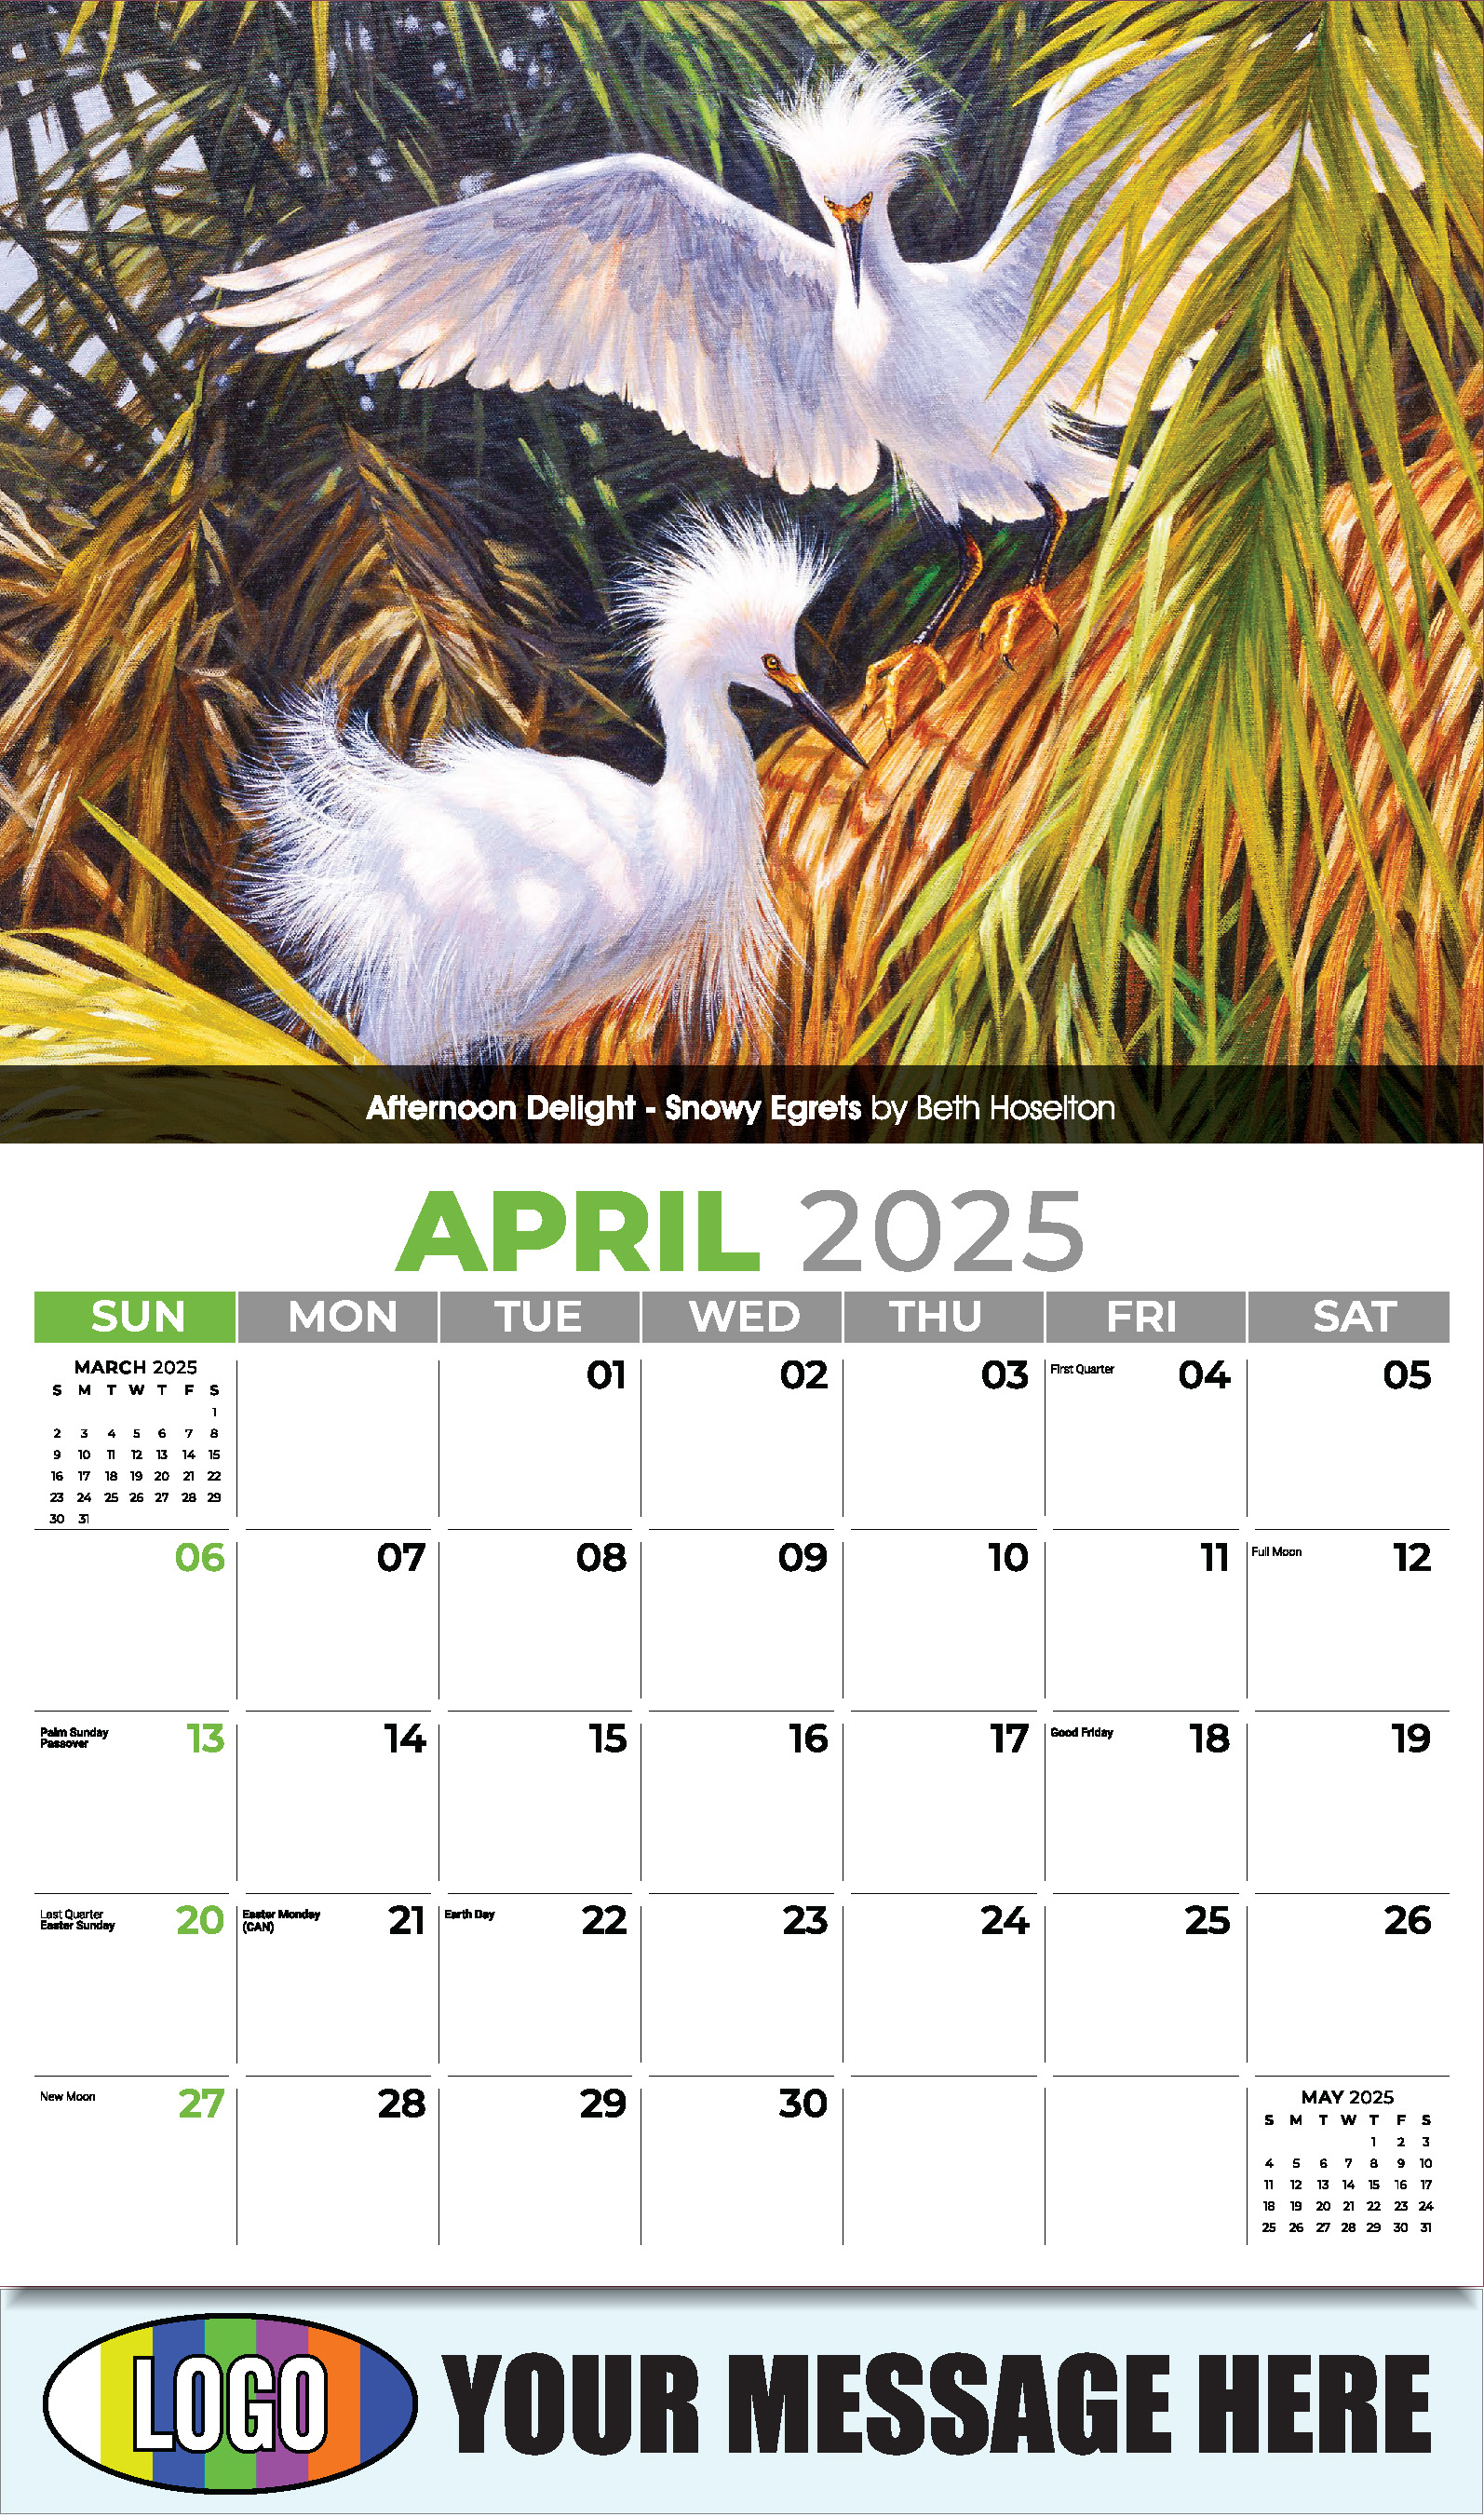 Wildlife Art Portraits 2025 Business Promotion Wall Calendar - April